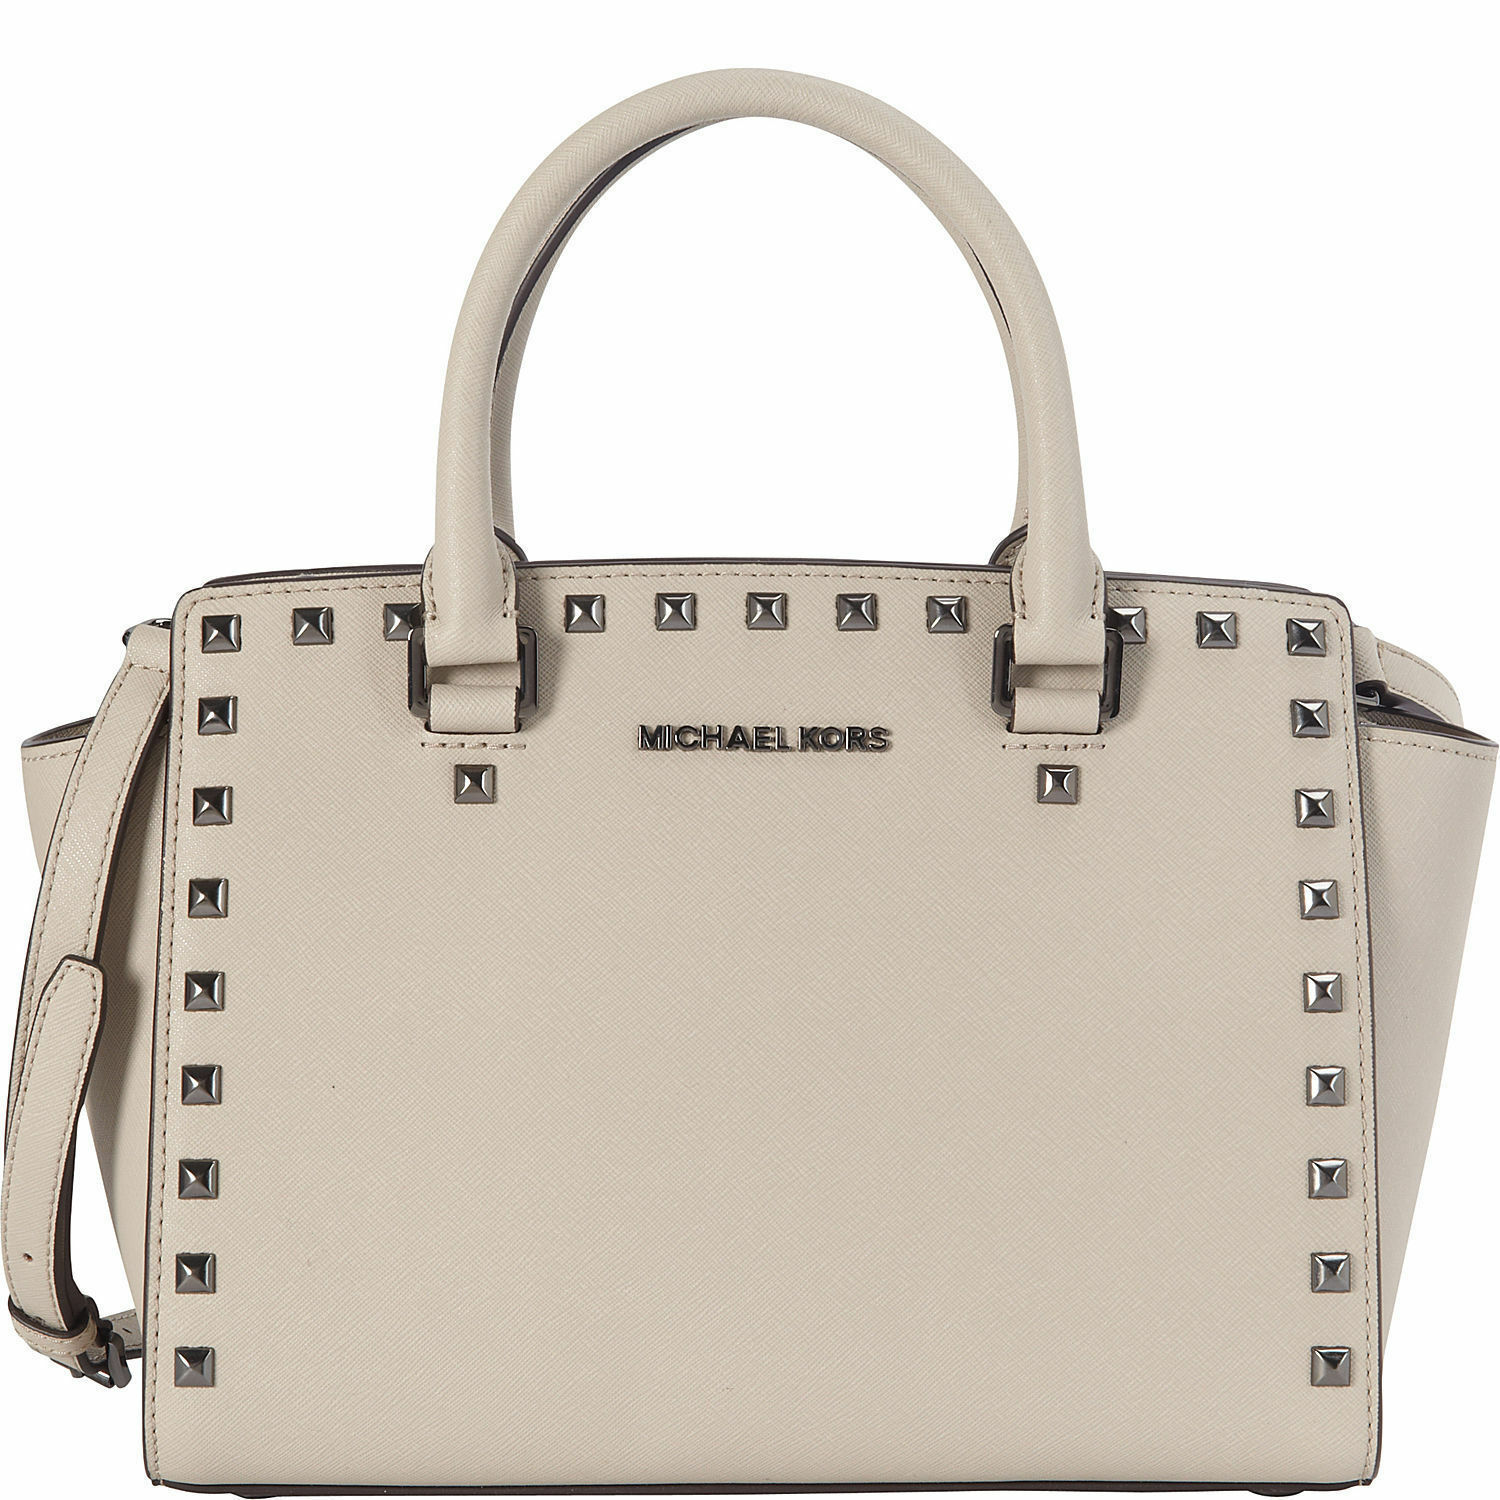 NWT Michael Kors Selma Studded Saffiano Leather Medium Pale Pink Handbag New